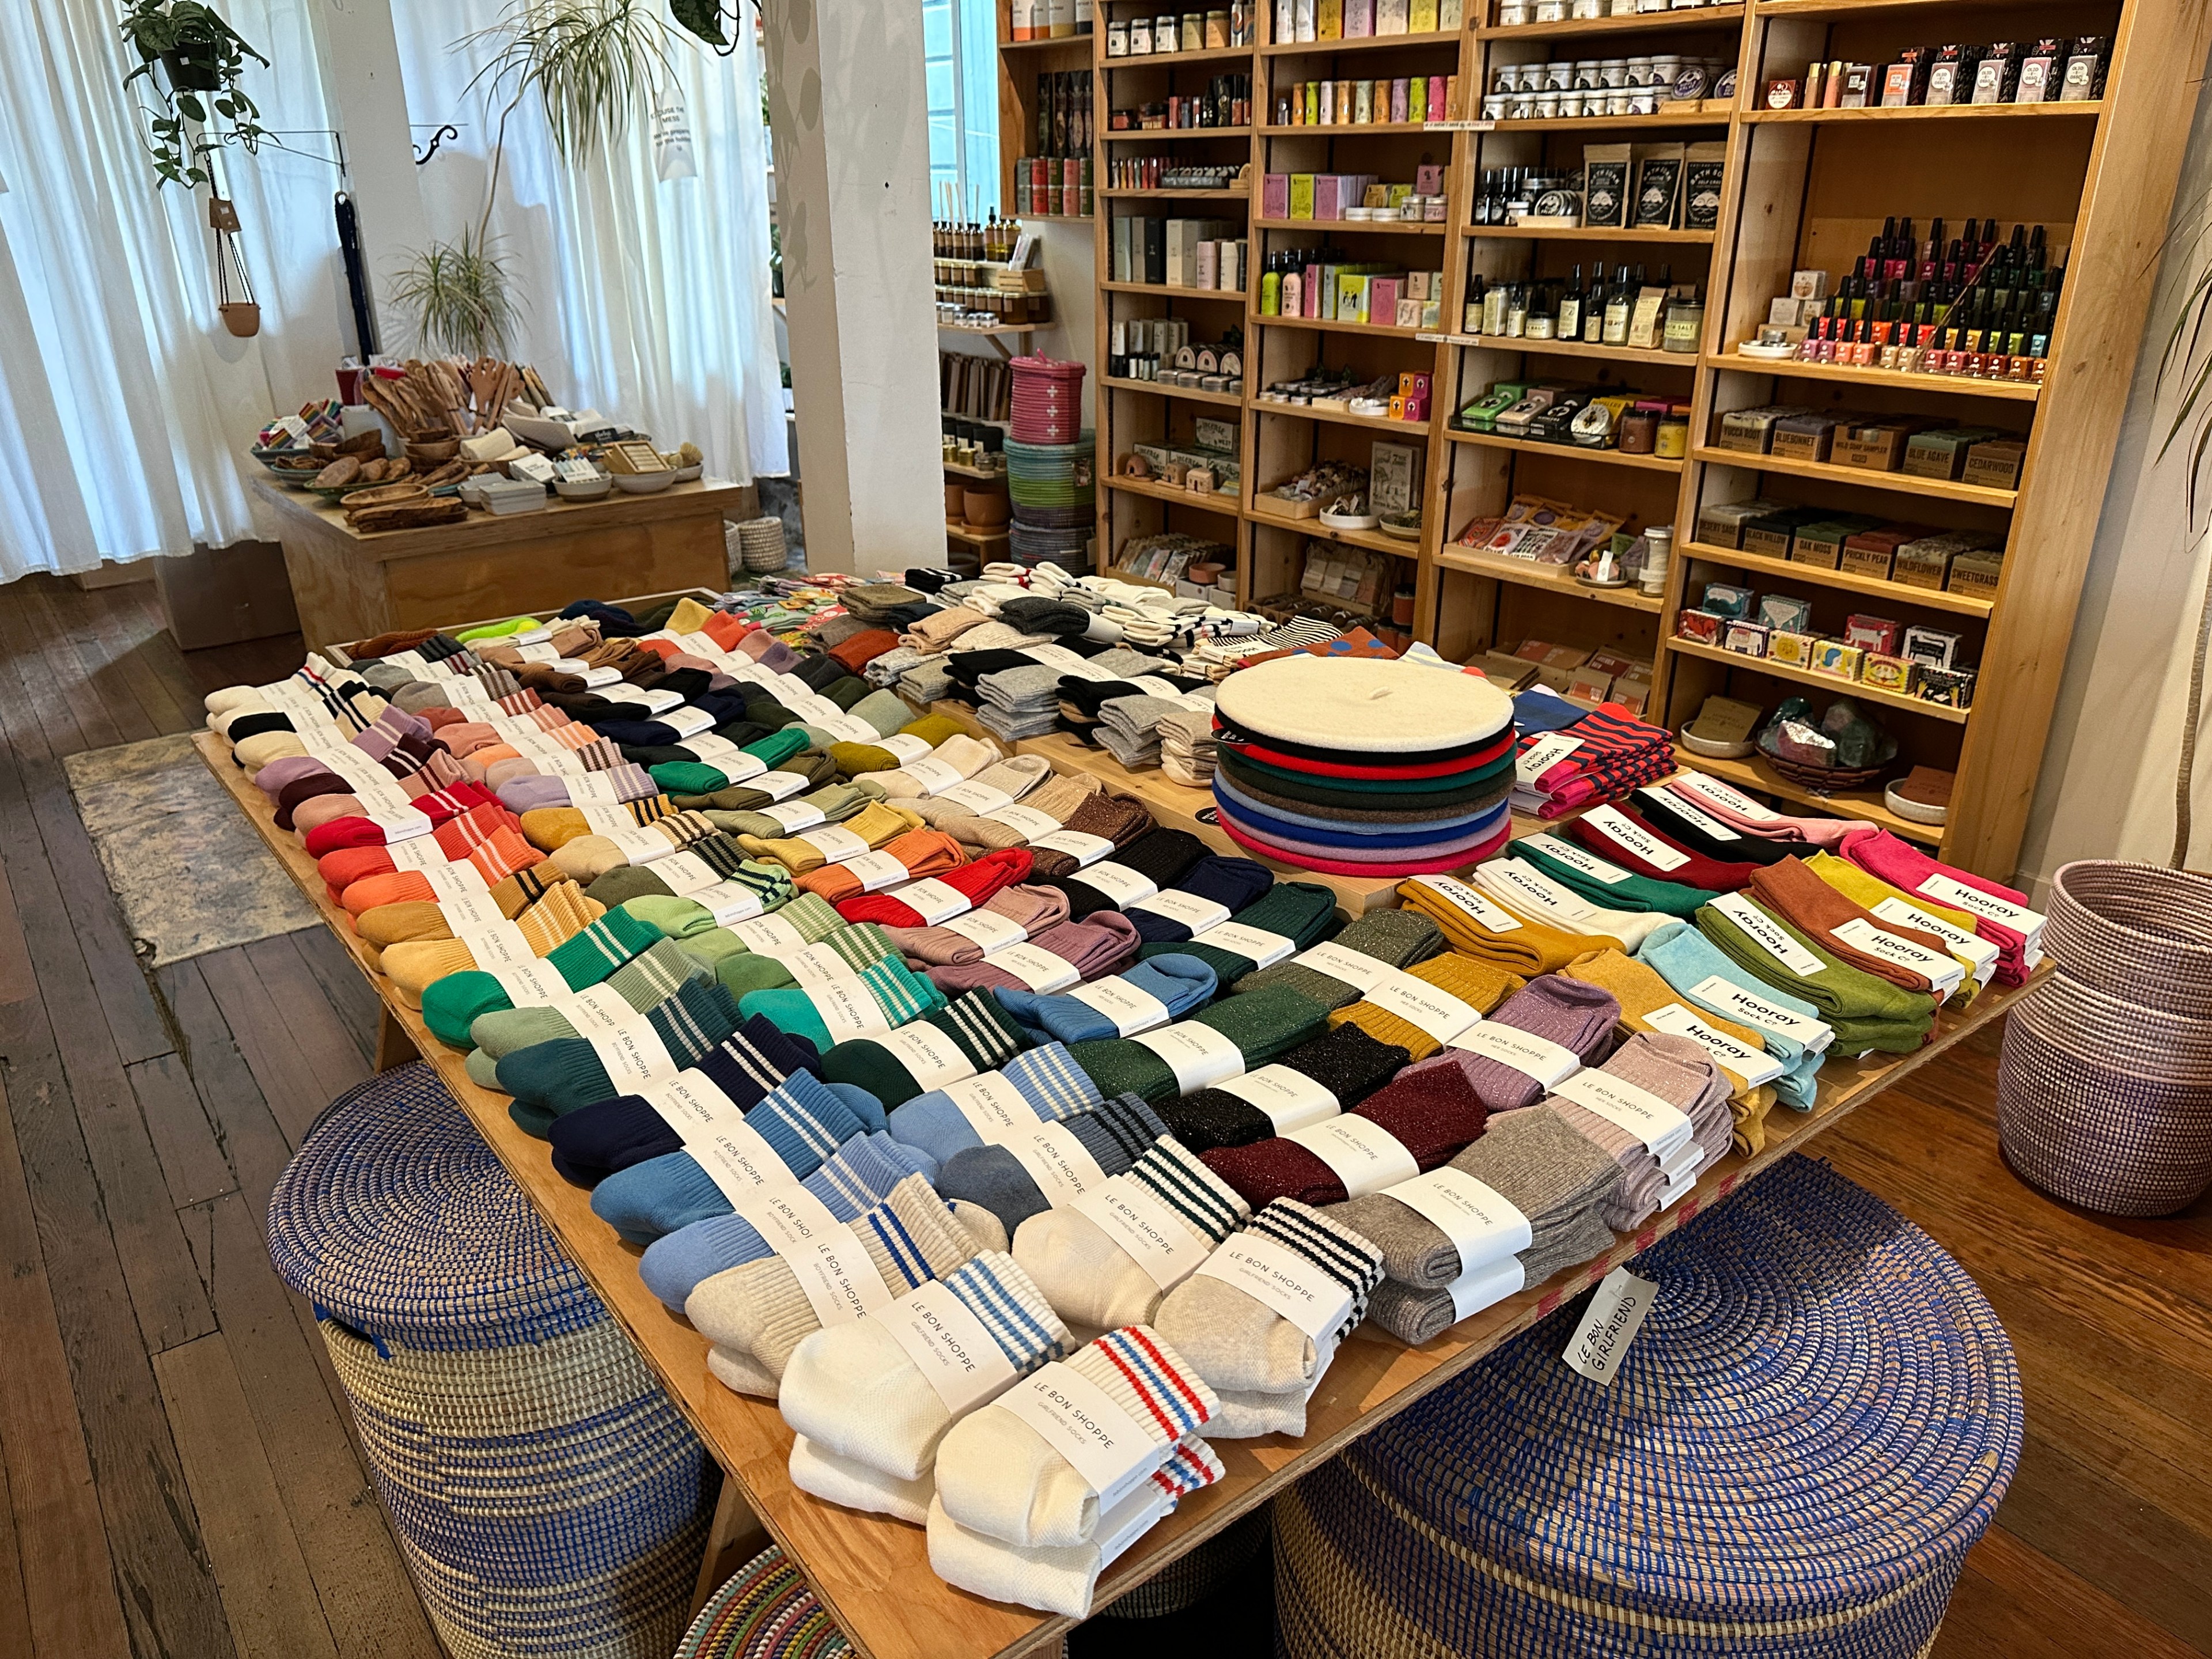 Bundles of colorful socks lie on display in a boutique gift shop.